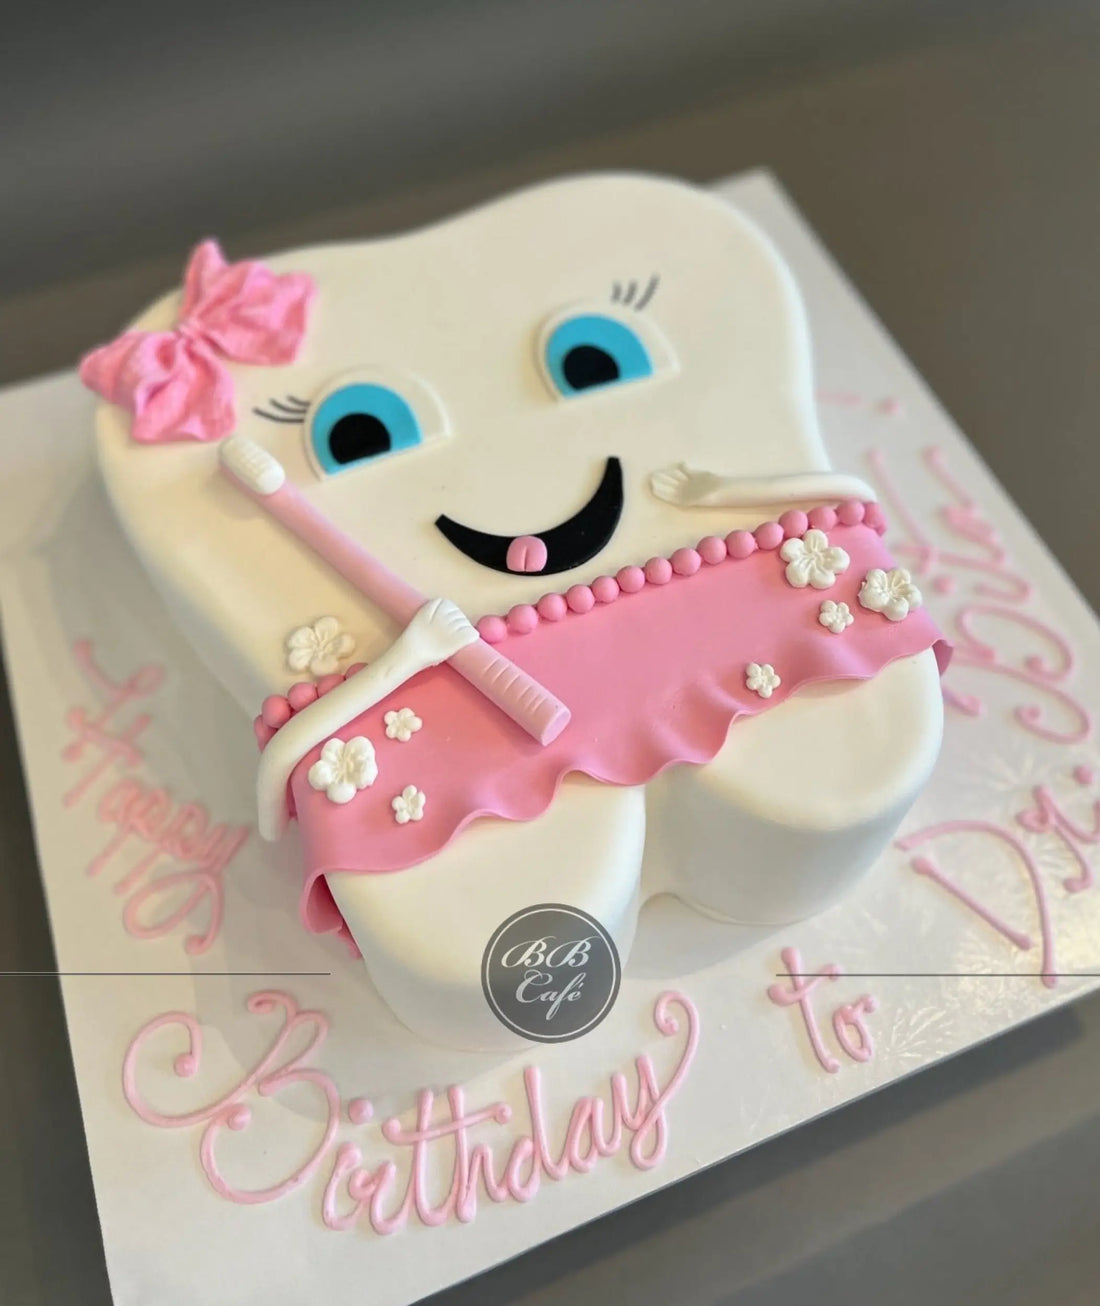 Happy tooth in fondant - custom cake